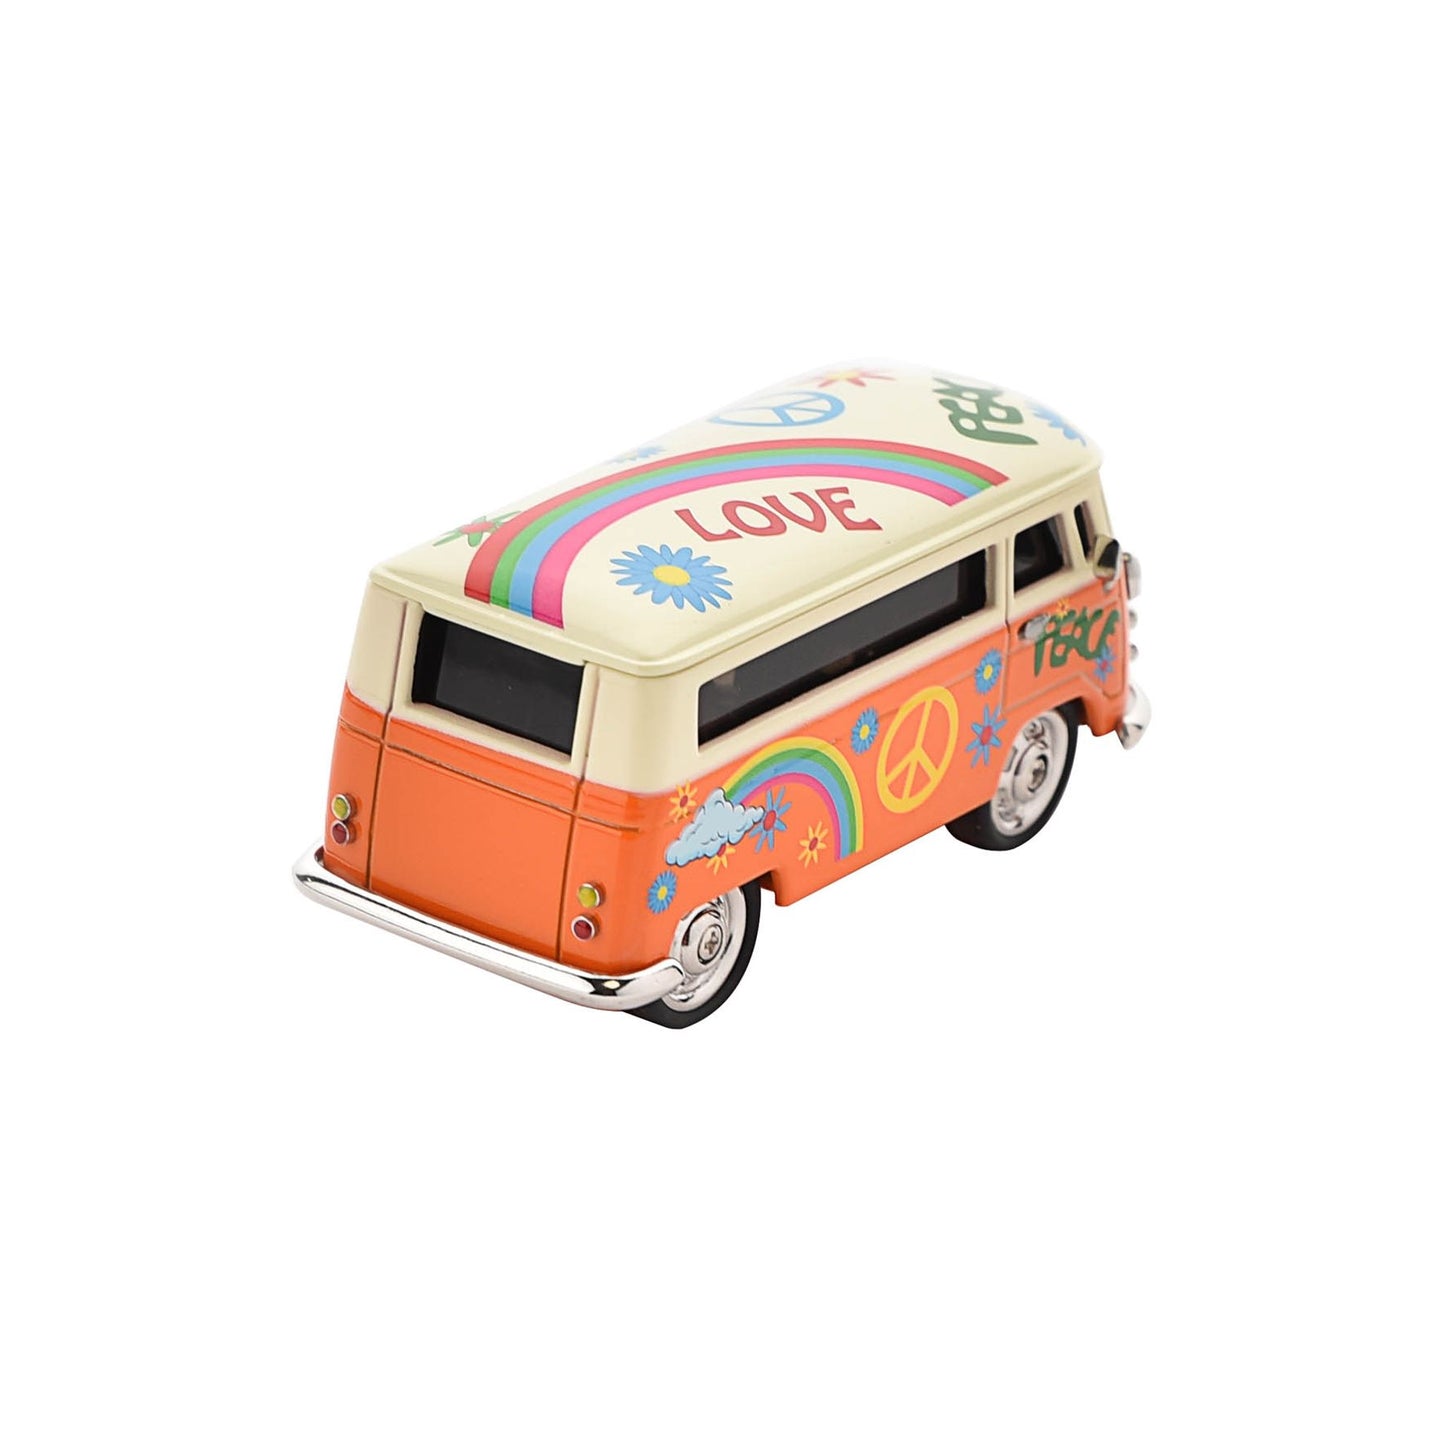 Miniature Orange Camper Van Clock